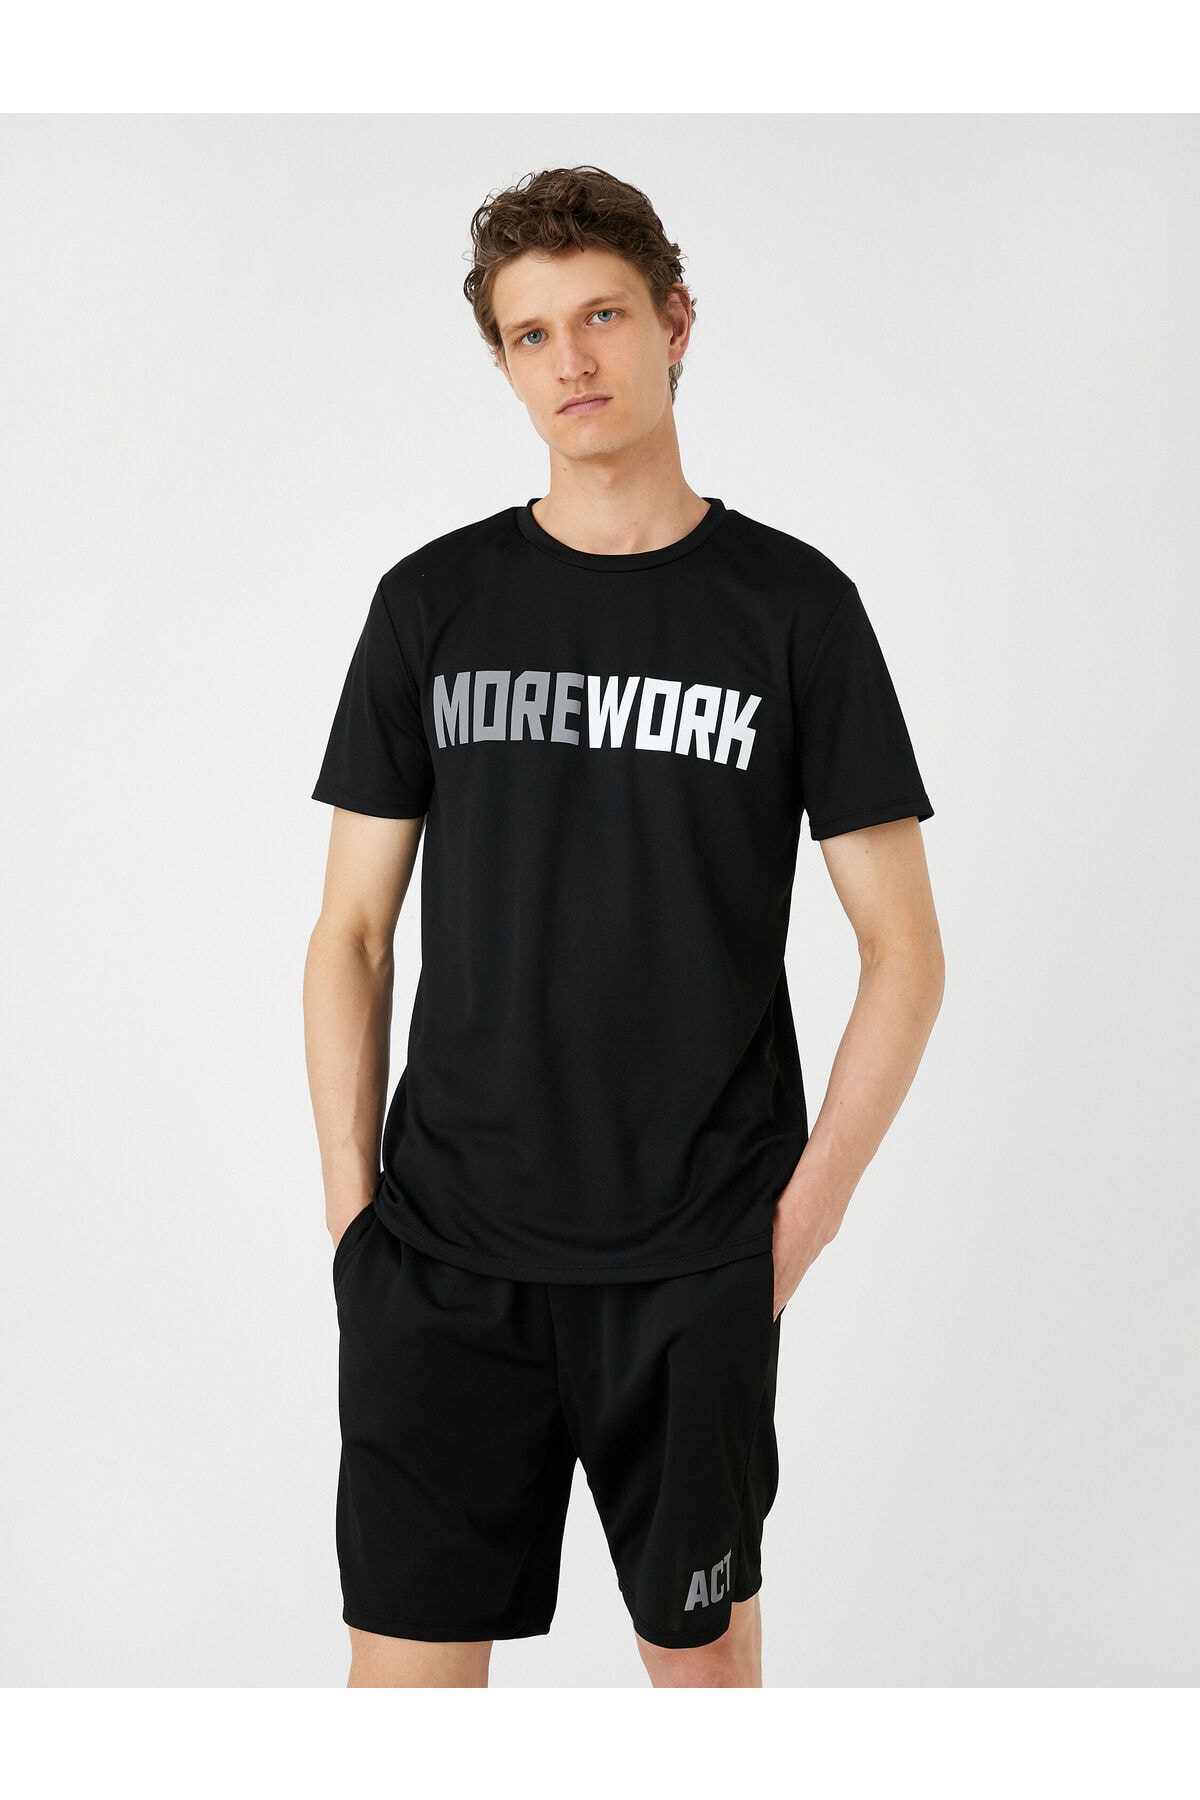 Koton Sports T-Shirt with Slogan Printed Crew Neck Short Sleeved.